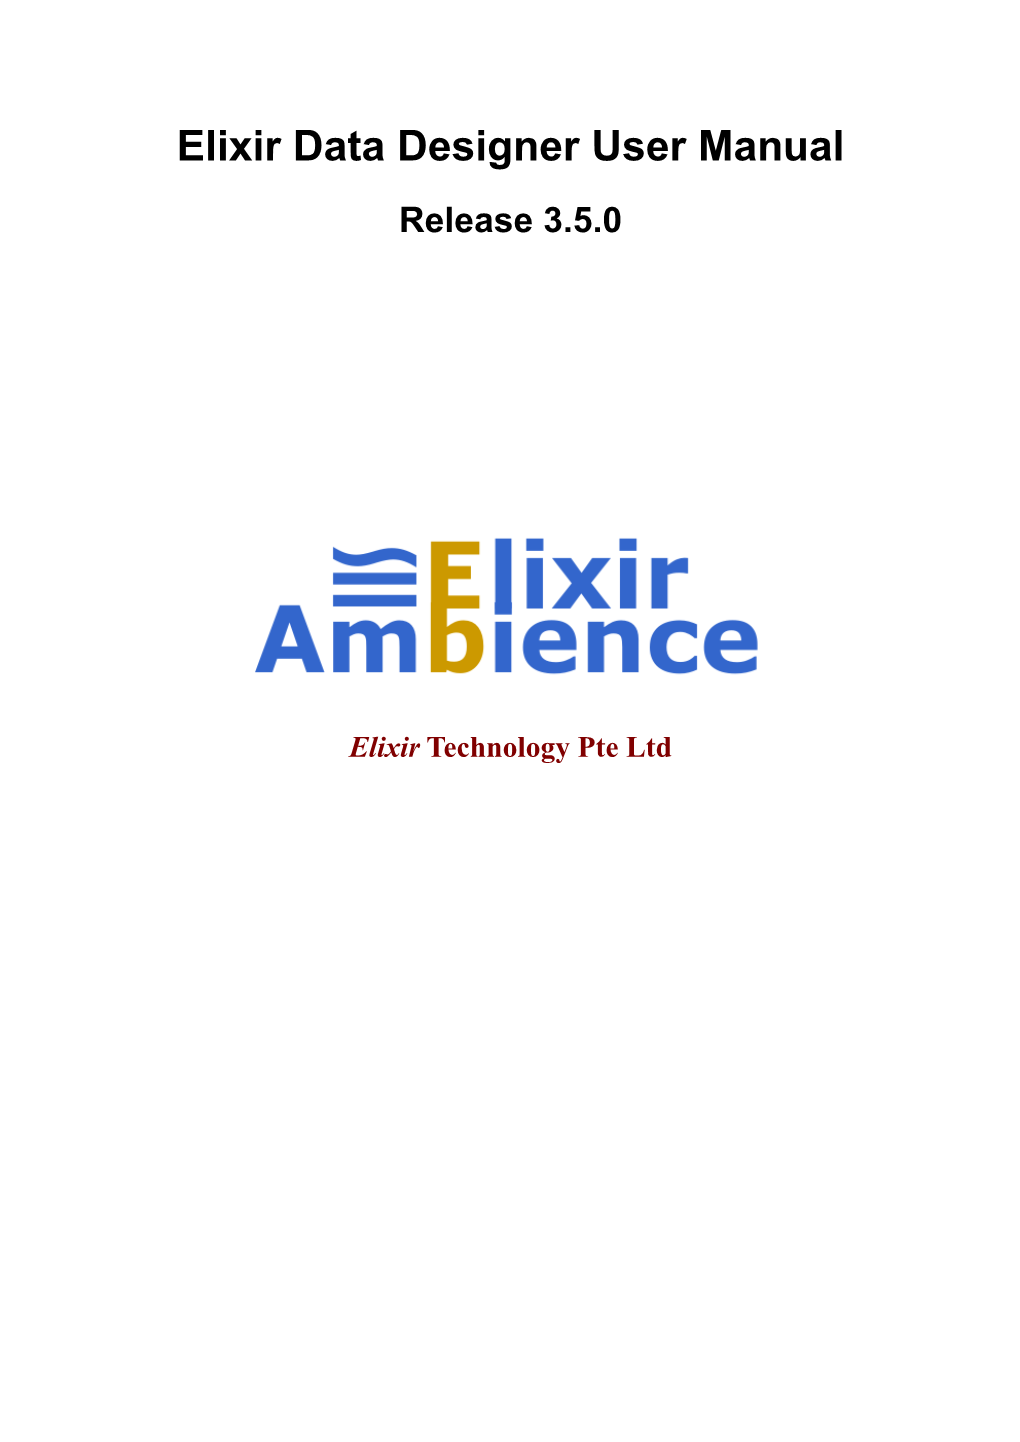 Elixir Data Designer User Manual Release 3.5.0